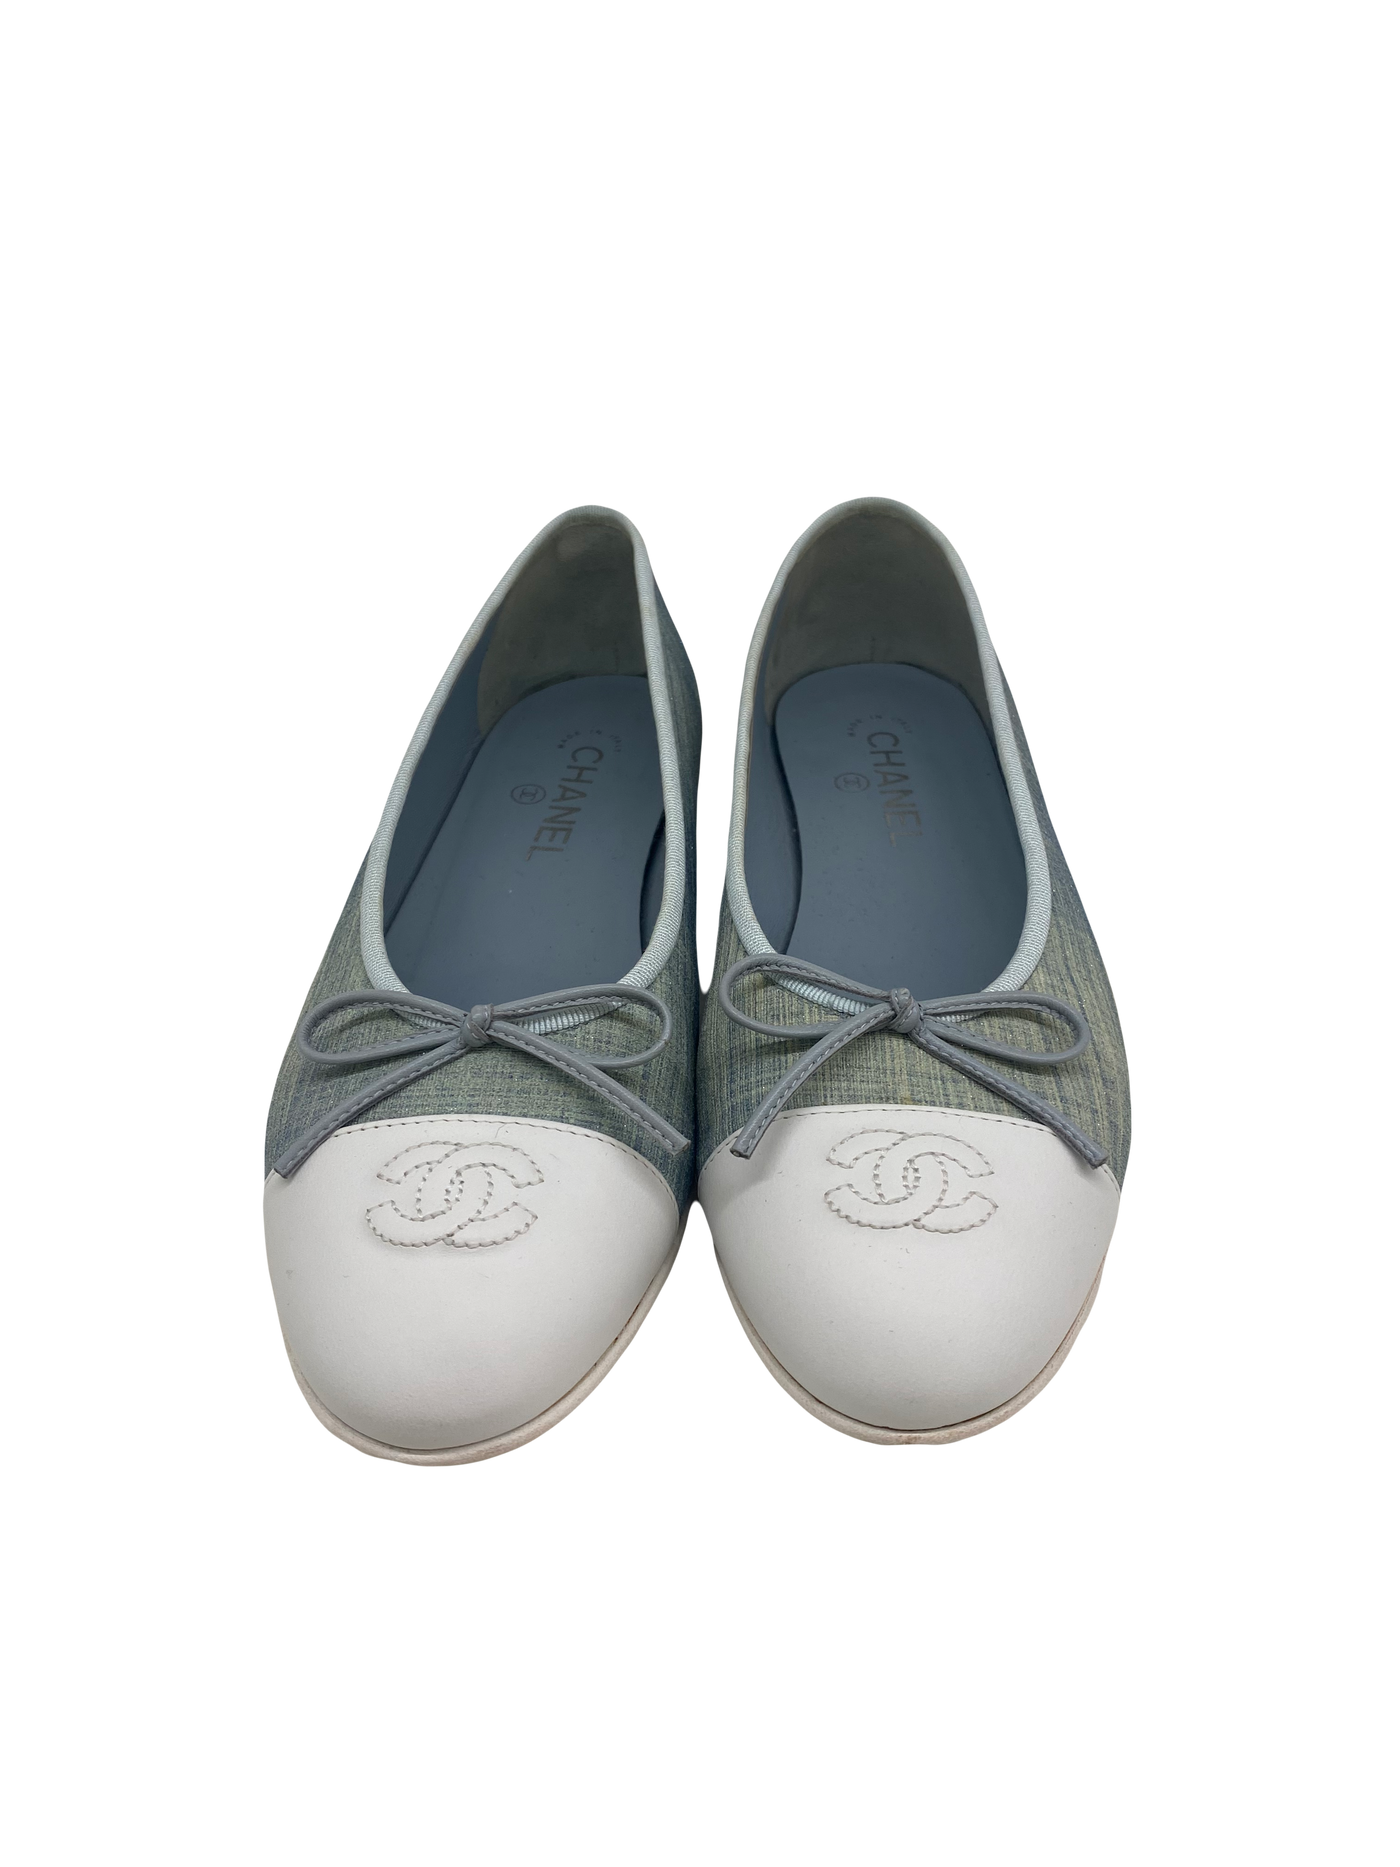 Chanel Blue Metallic Ballet Flats - Size 41